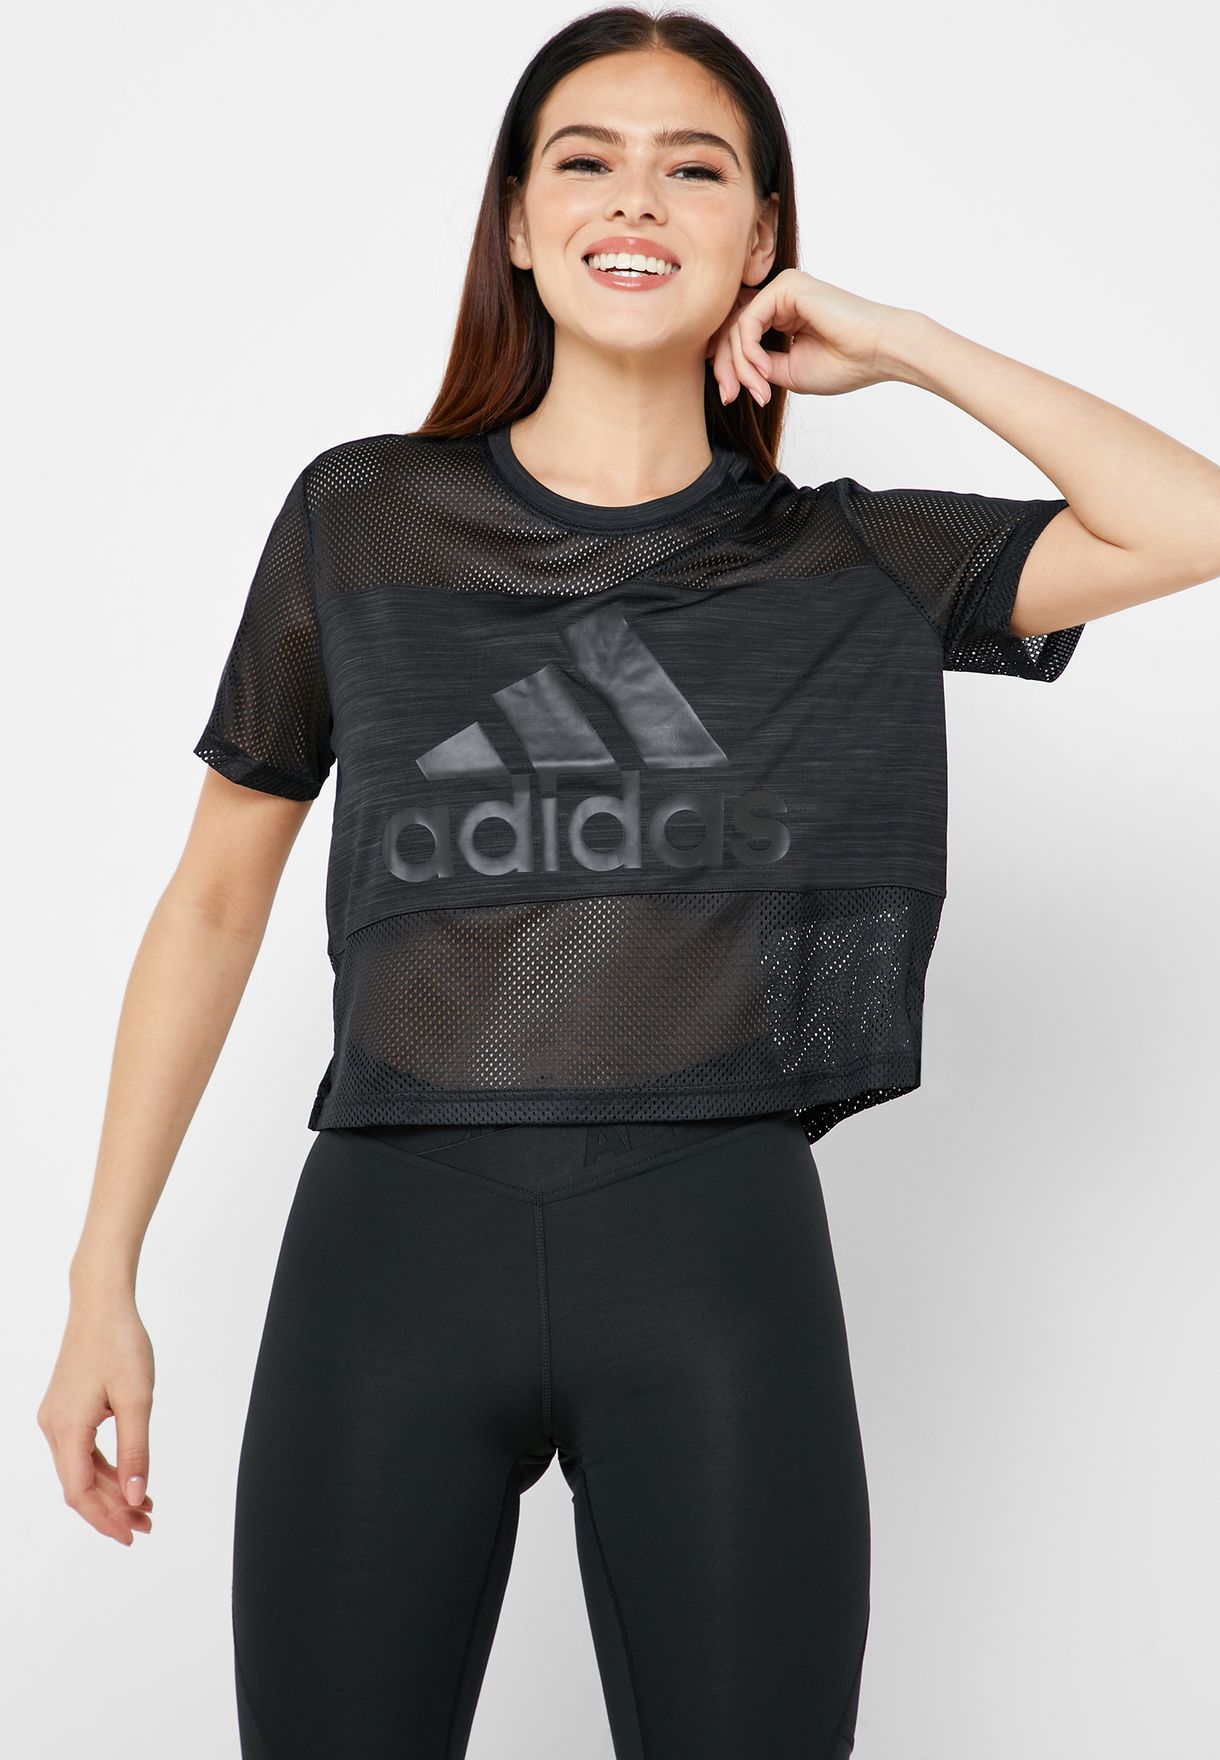 adidas mesh shirt womens